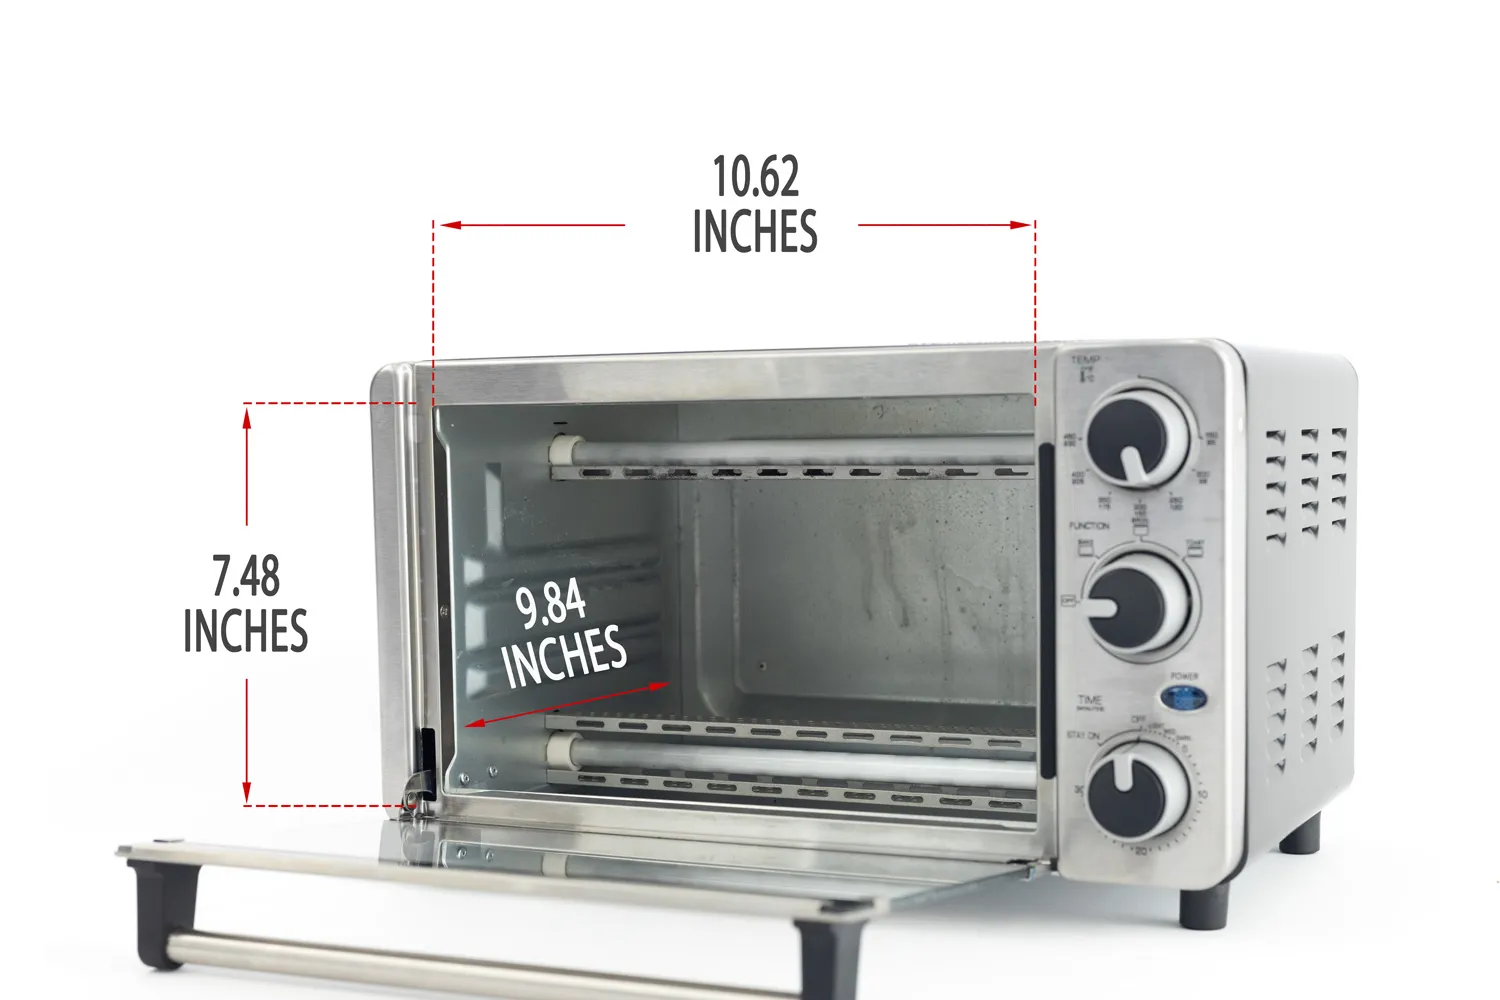 MUELLER Countertop Toaster Oven & Pizza Maker Large 4-Slice